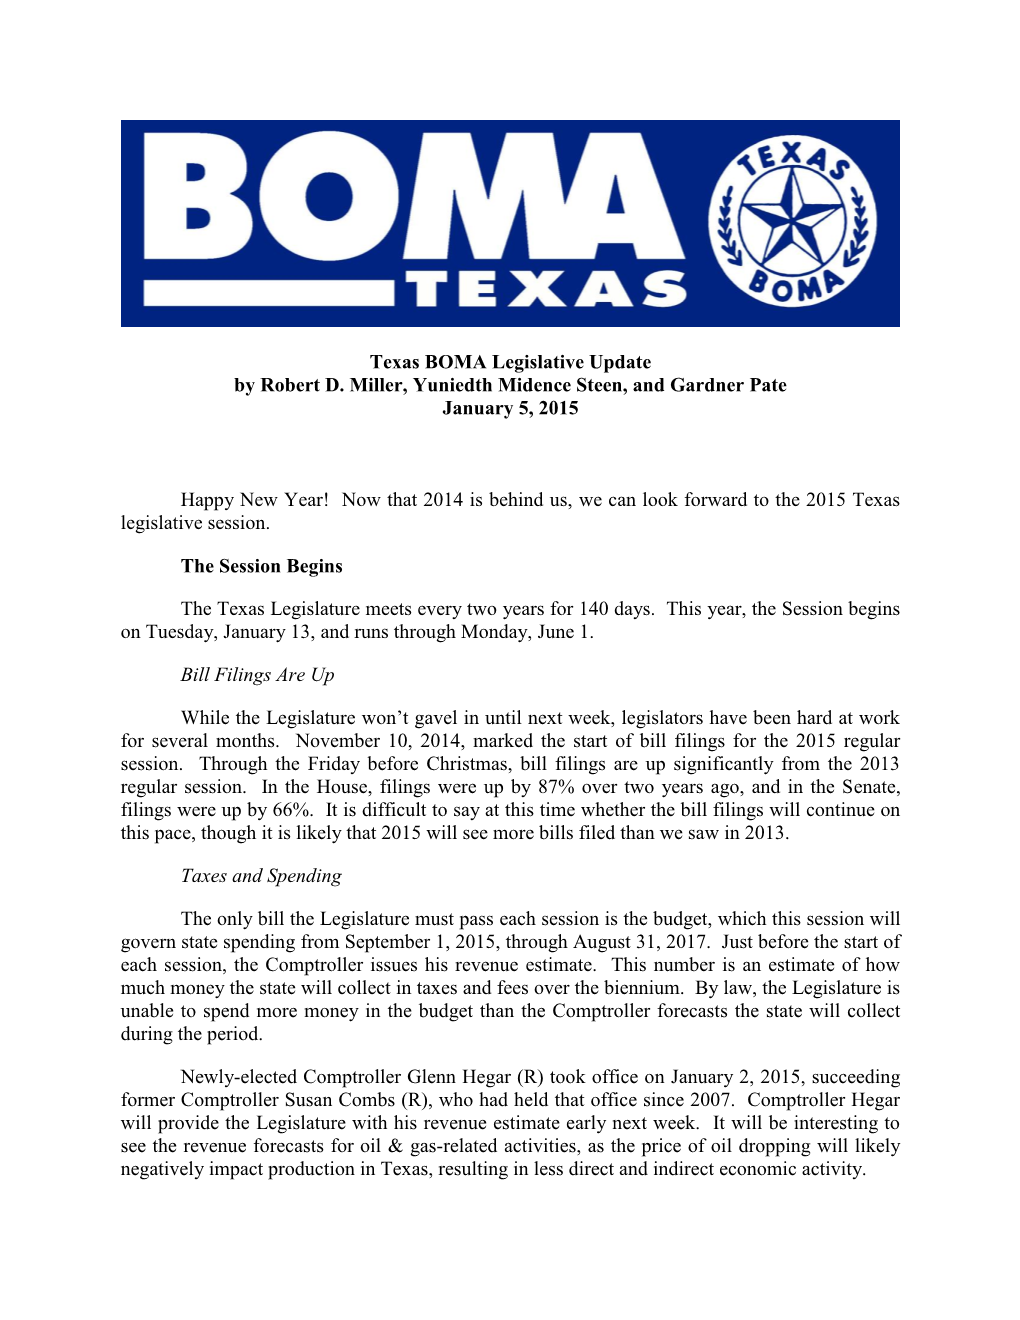 Texas BOMA Legislative Update by Robert D. Miller, Yuniedth Midence Steen, and Gardner Pate January 5, 2015